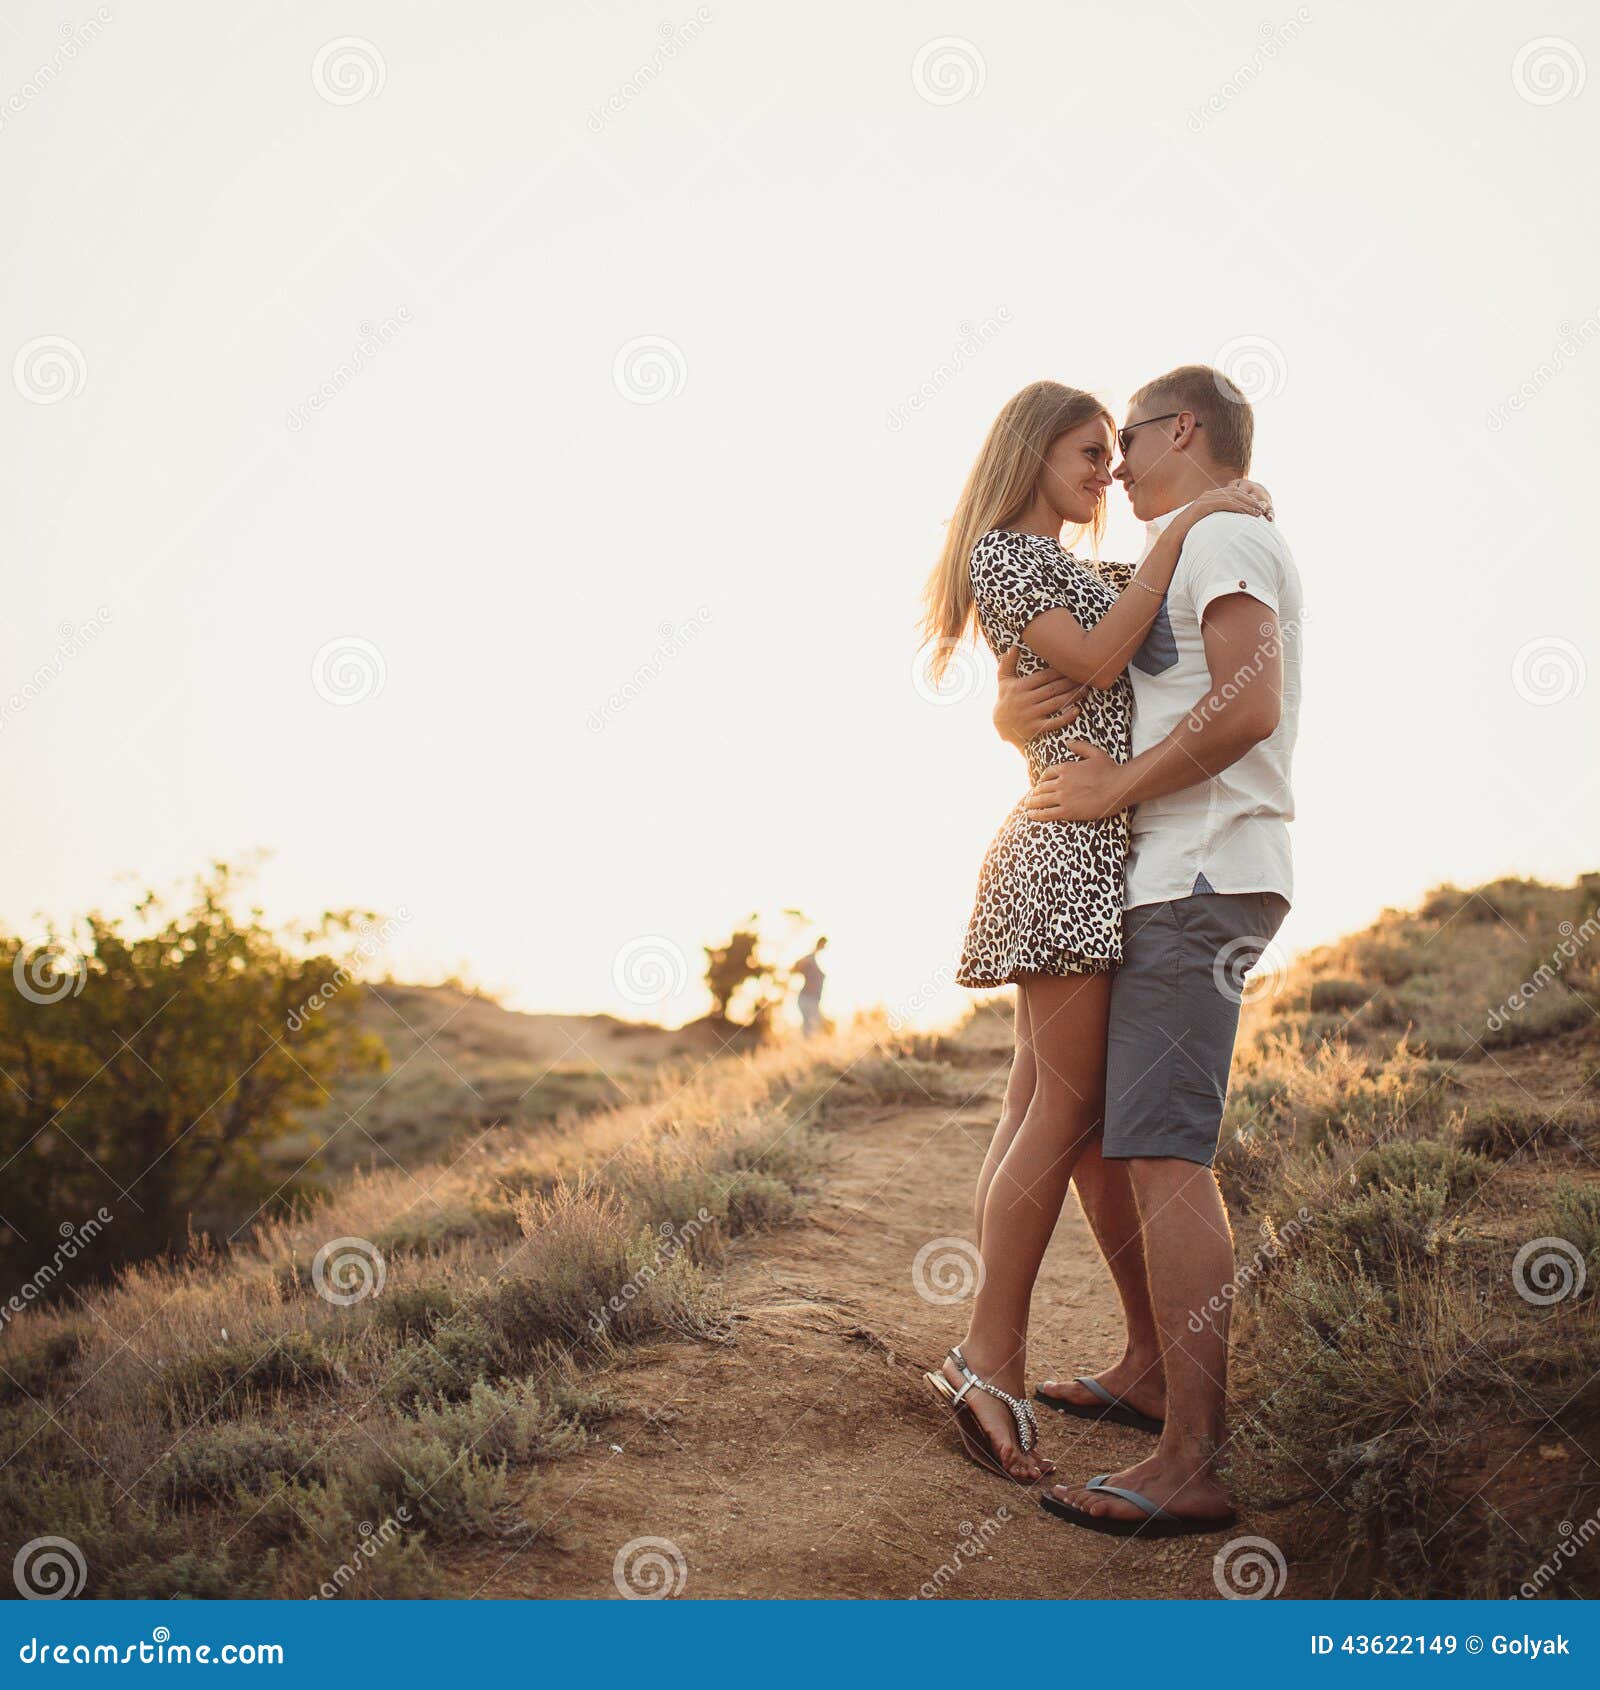 https://thumbs.dreamstime.com/z/young-couple-love-attractive-man-woman-men-women-enjoying-romantic-evening-holding-hands-to-watch-sunset-43622149.jpg